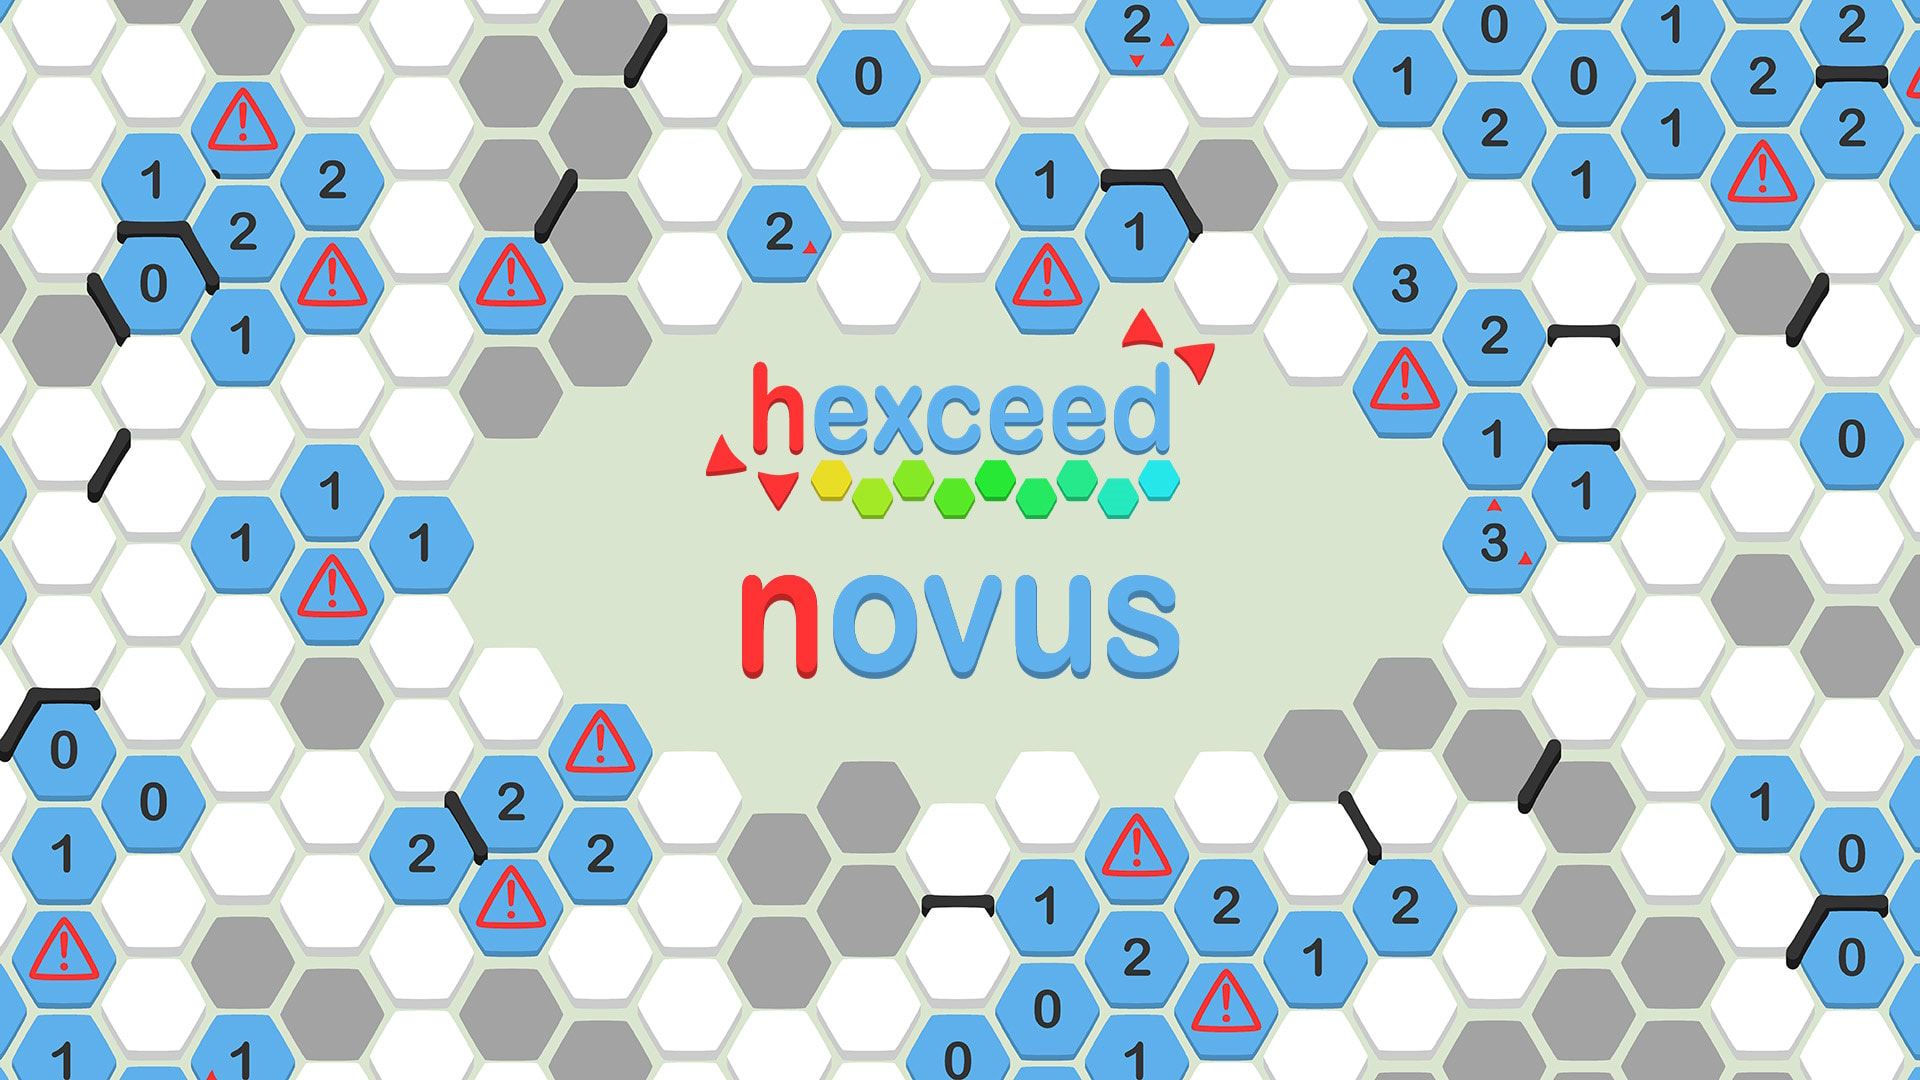 Novus 1